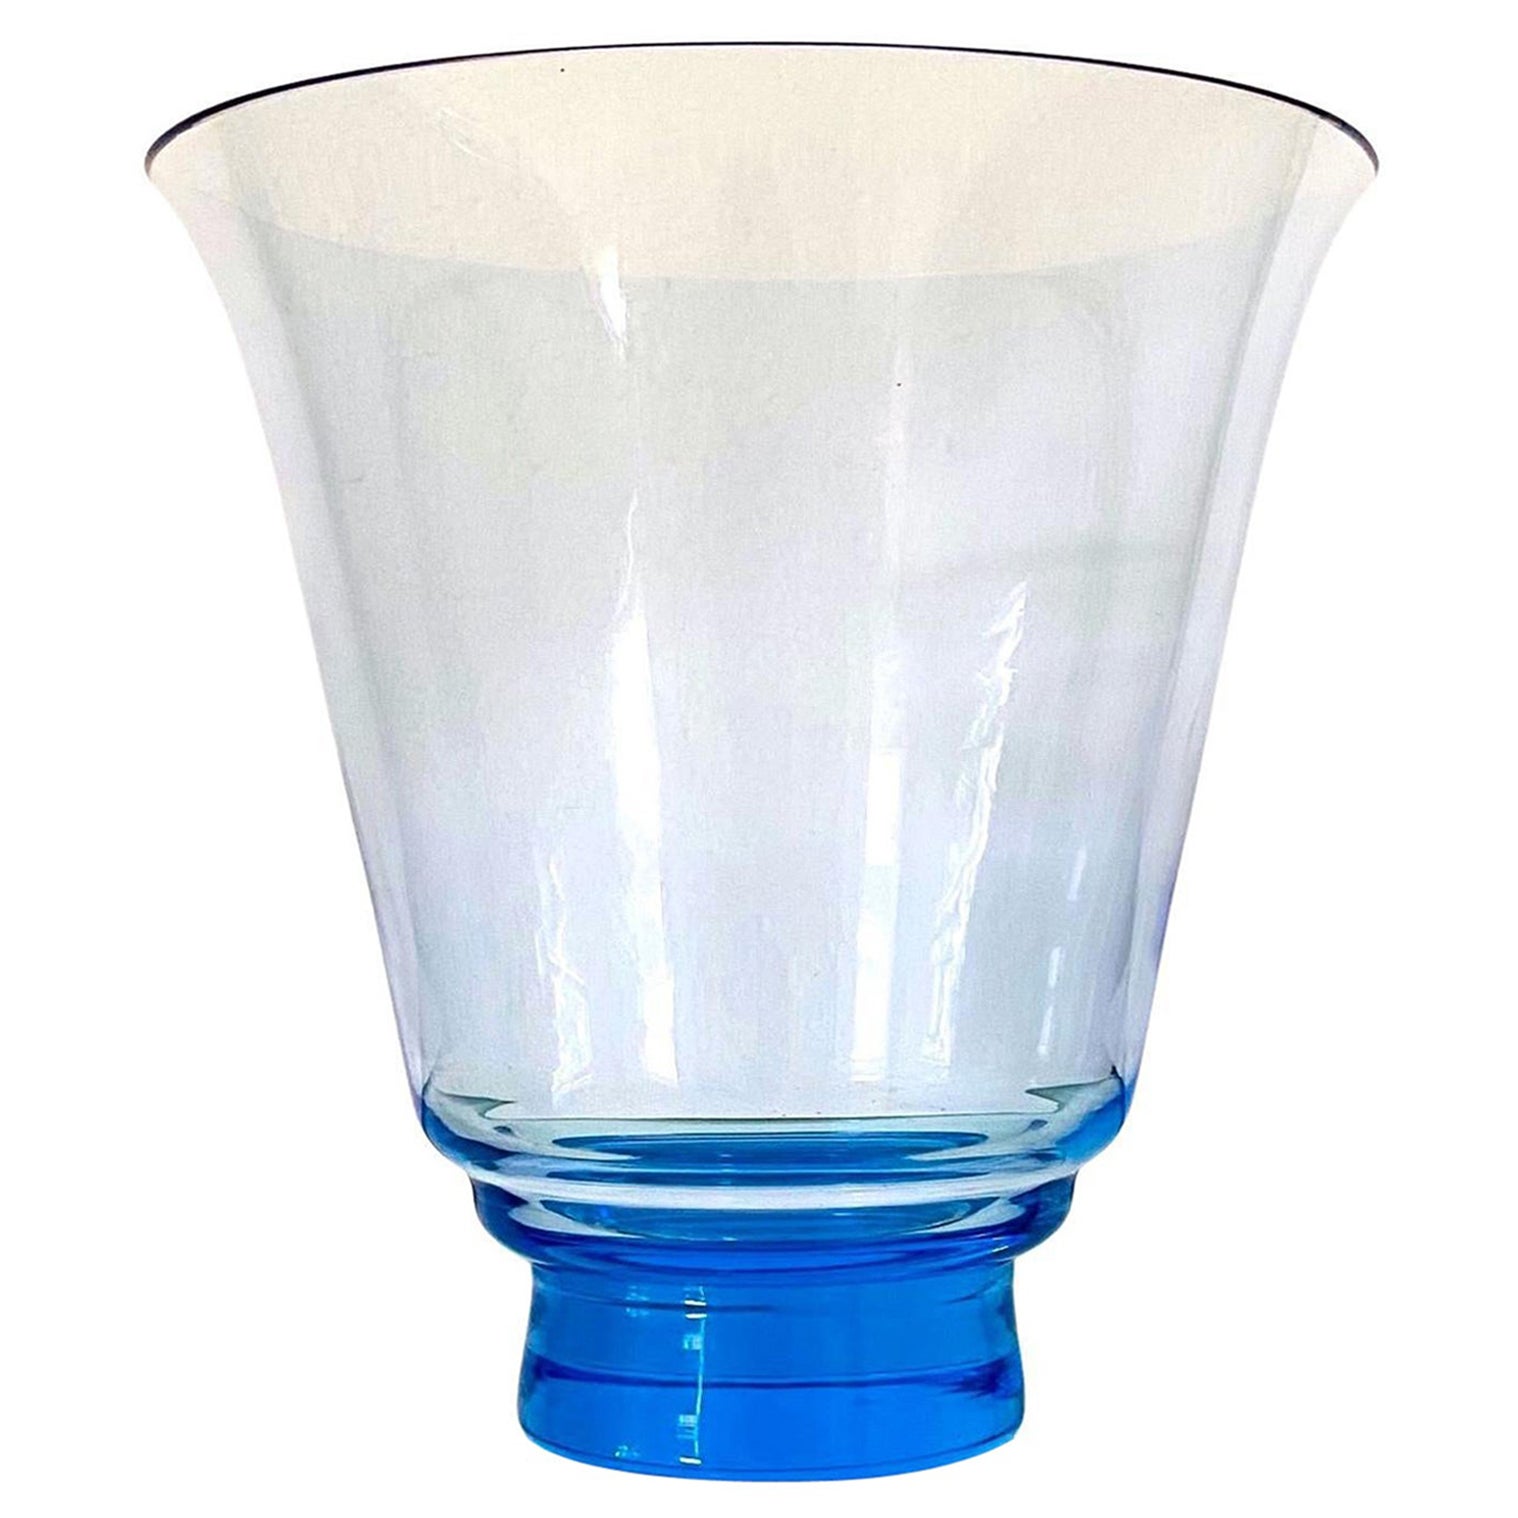 Art Deco Crystal Vase in Electric Blue, Czech Republic, c. 1940s